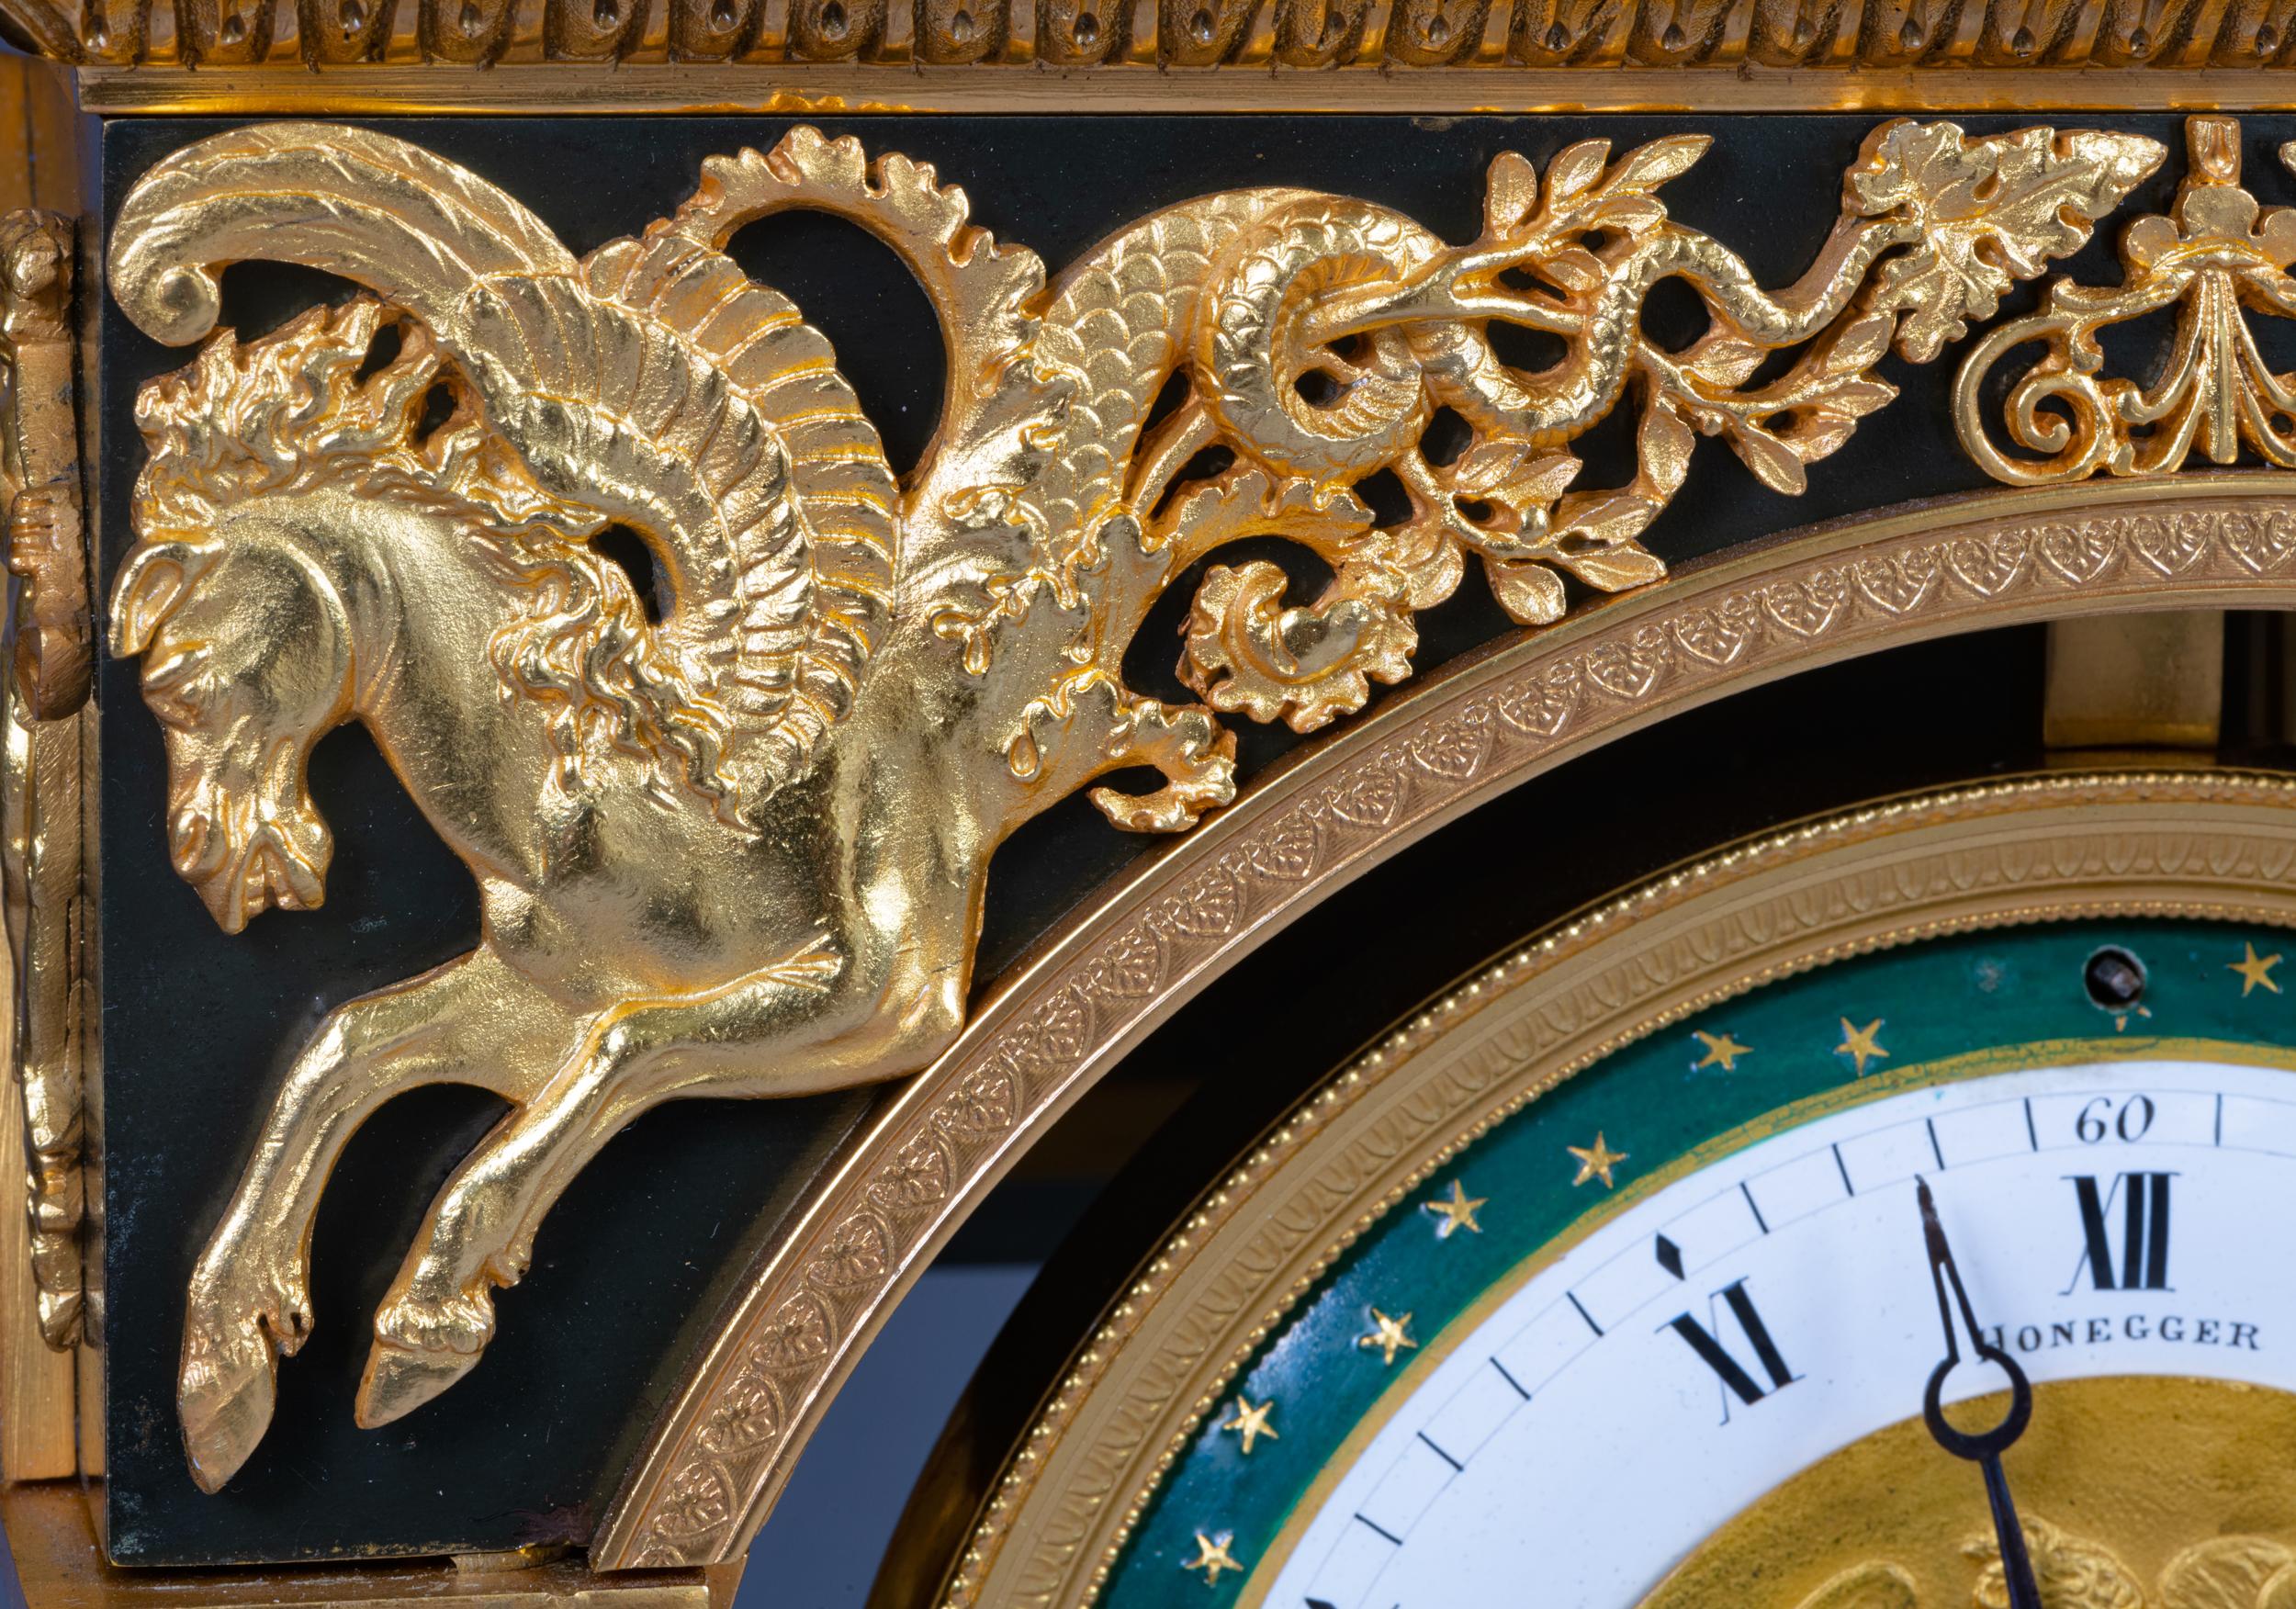 19th Century, French Bronze & Ormolu Mantle Clock by Honegger 3